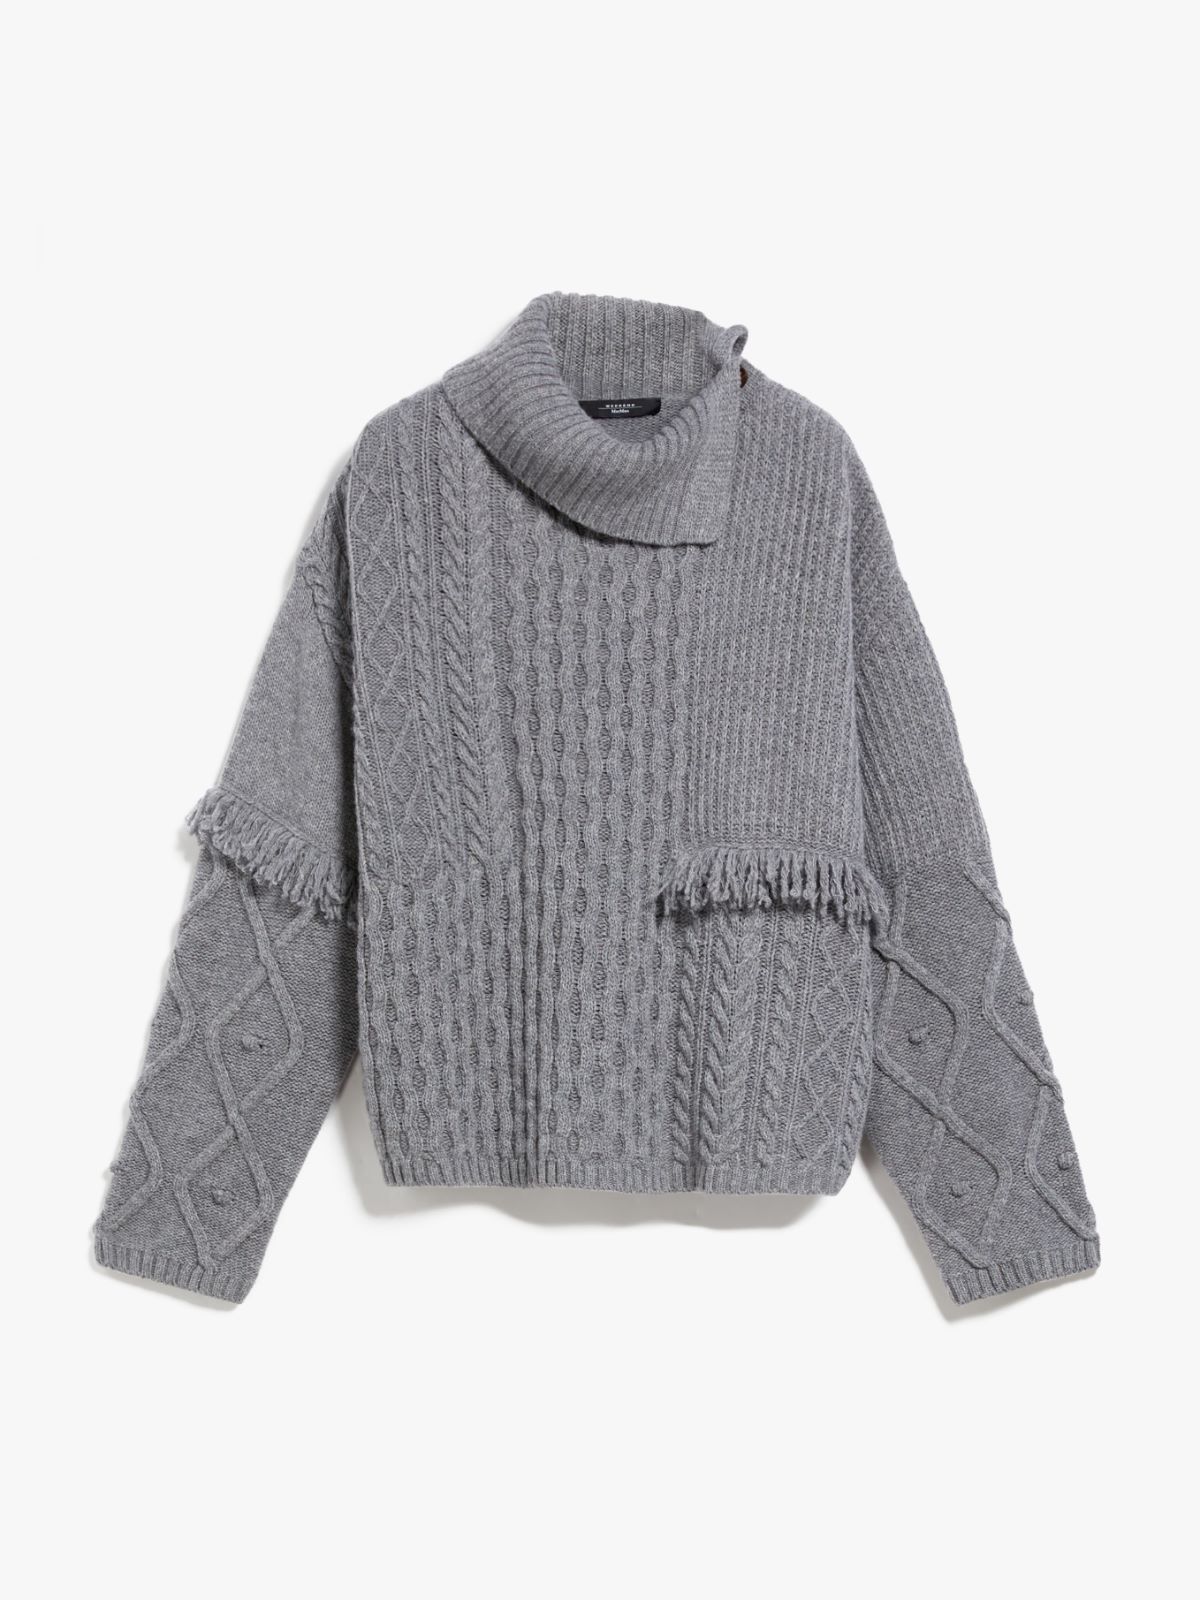 Carded wool sweater - MEDIUM GREY - Weekend Max Mara - 6